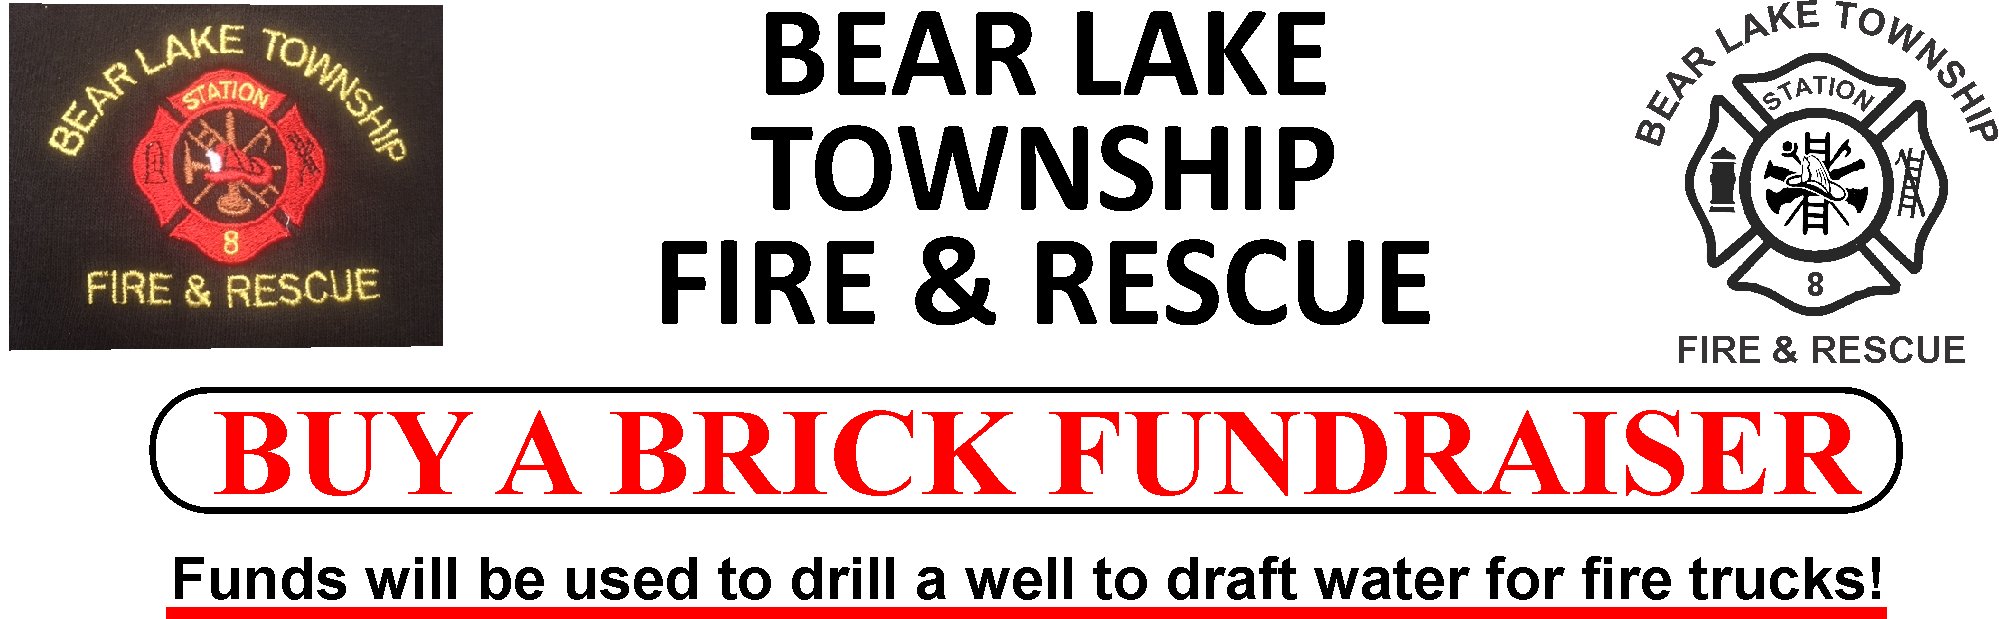 Bear Lake Township Fire & Rescue brick Fundraiser